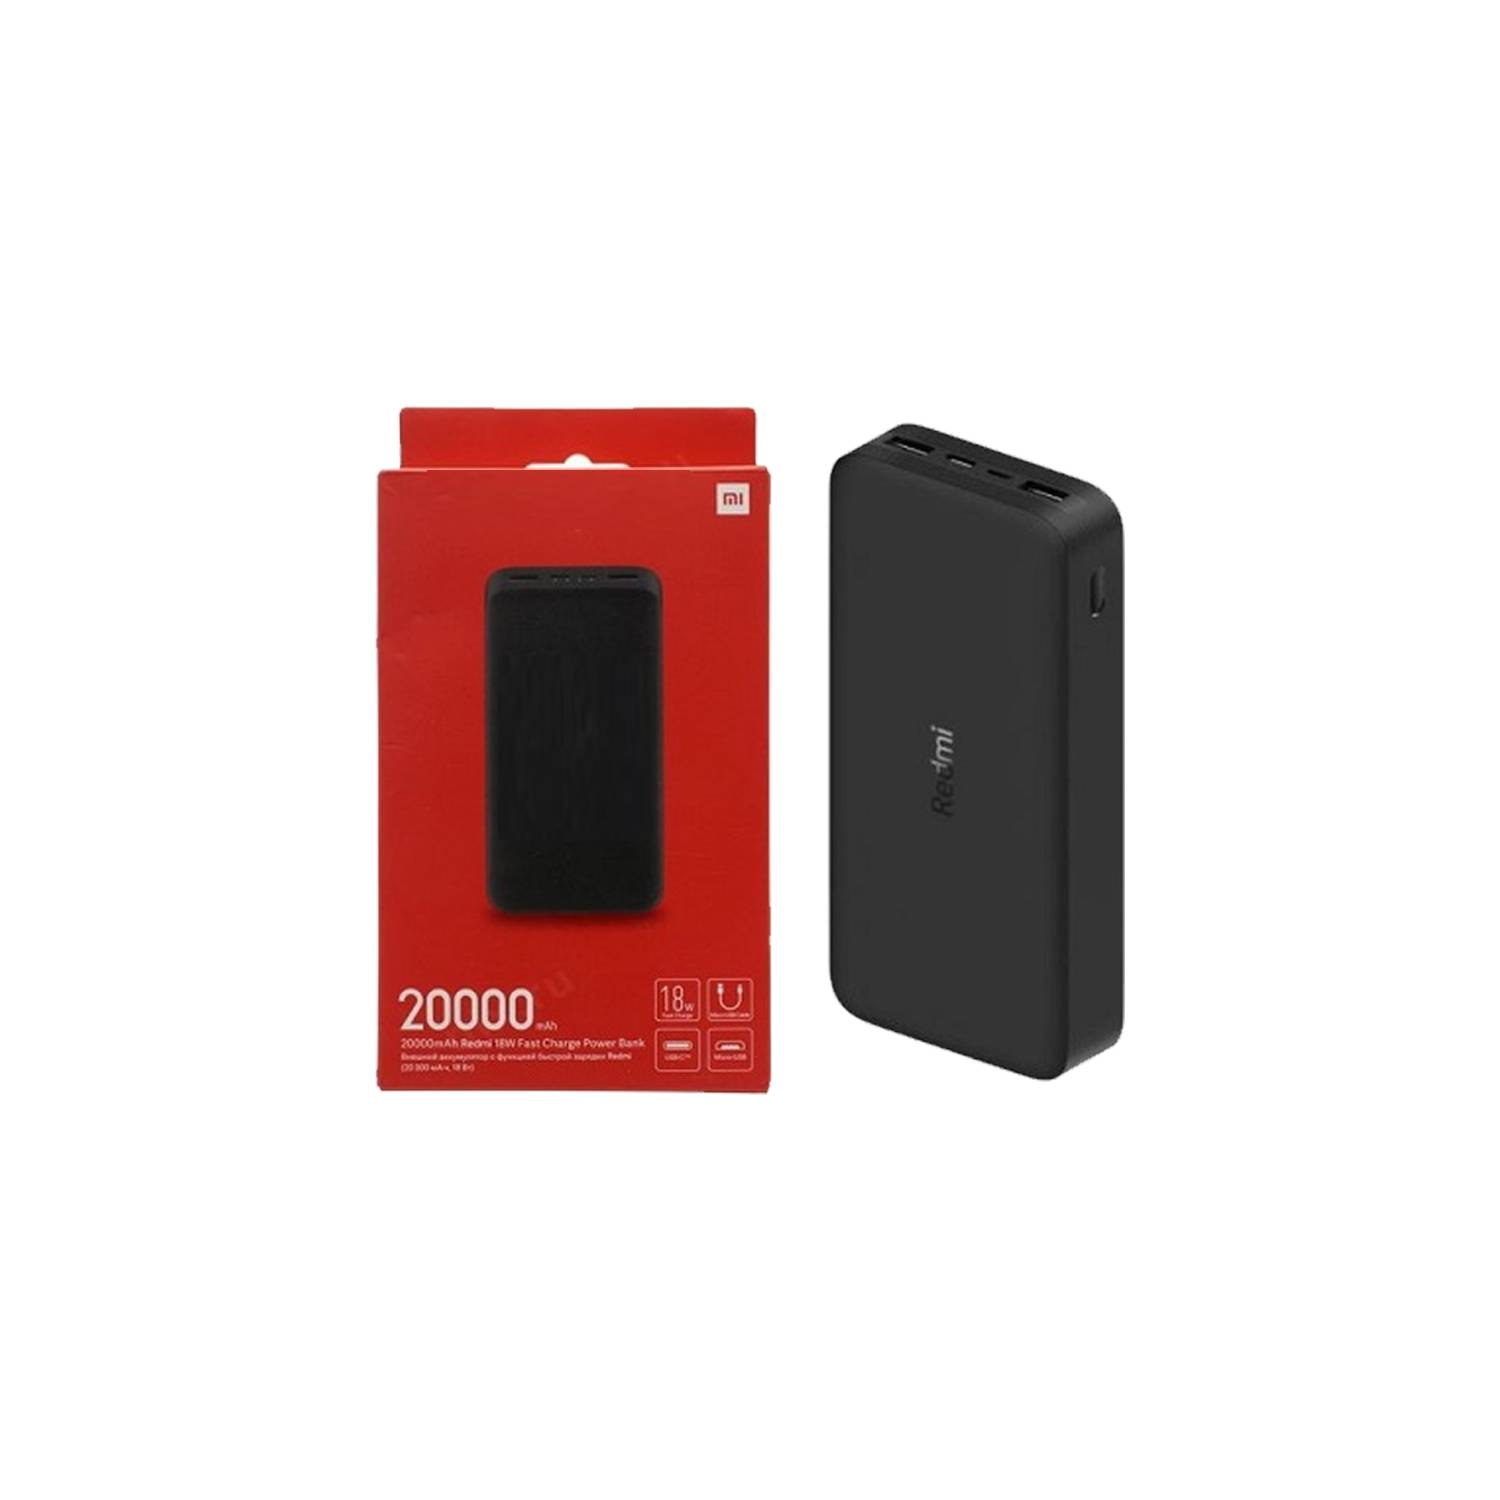 Xiaomi Redmi Powerbank Bateria Externa 20000mah Carga Rapida Color Negro